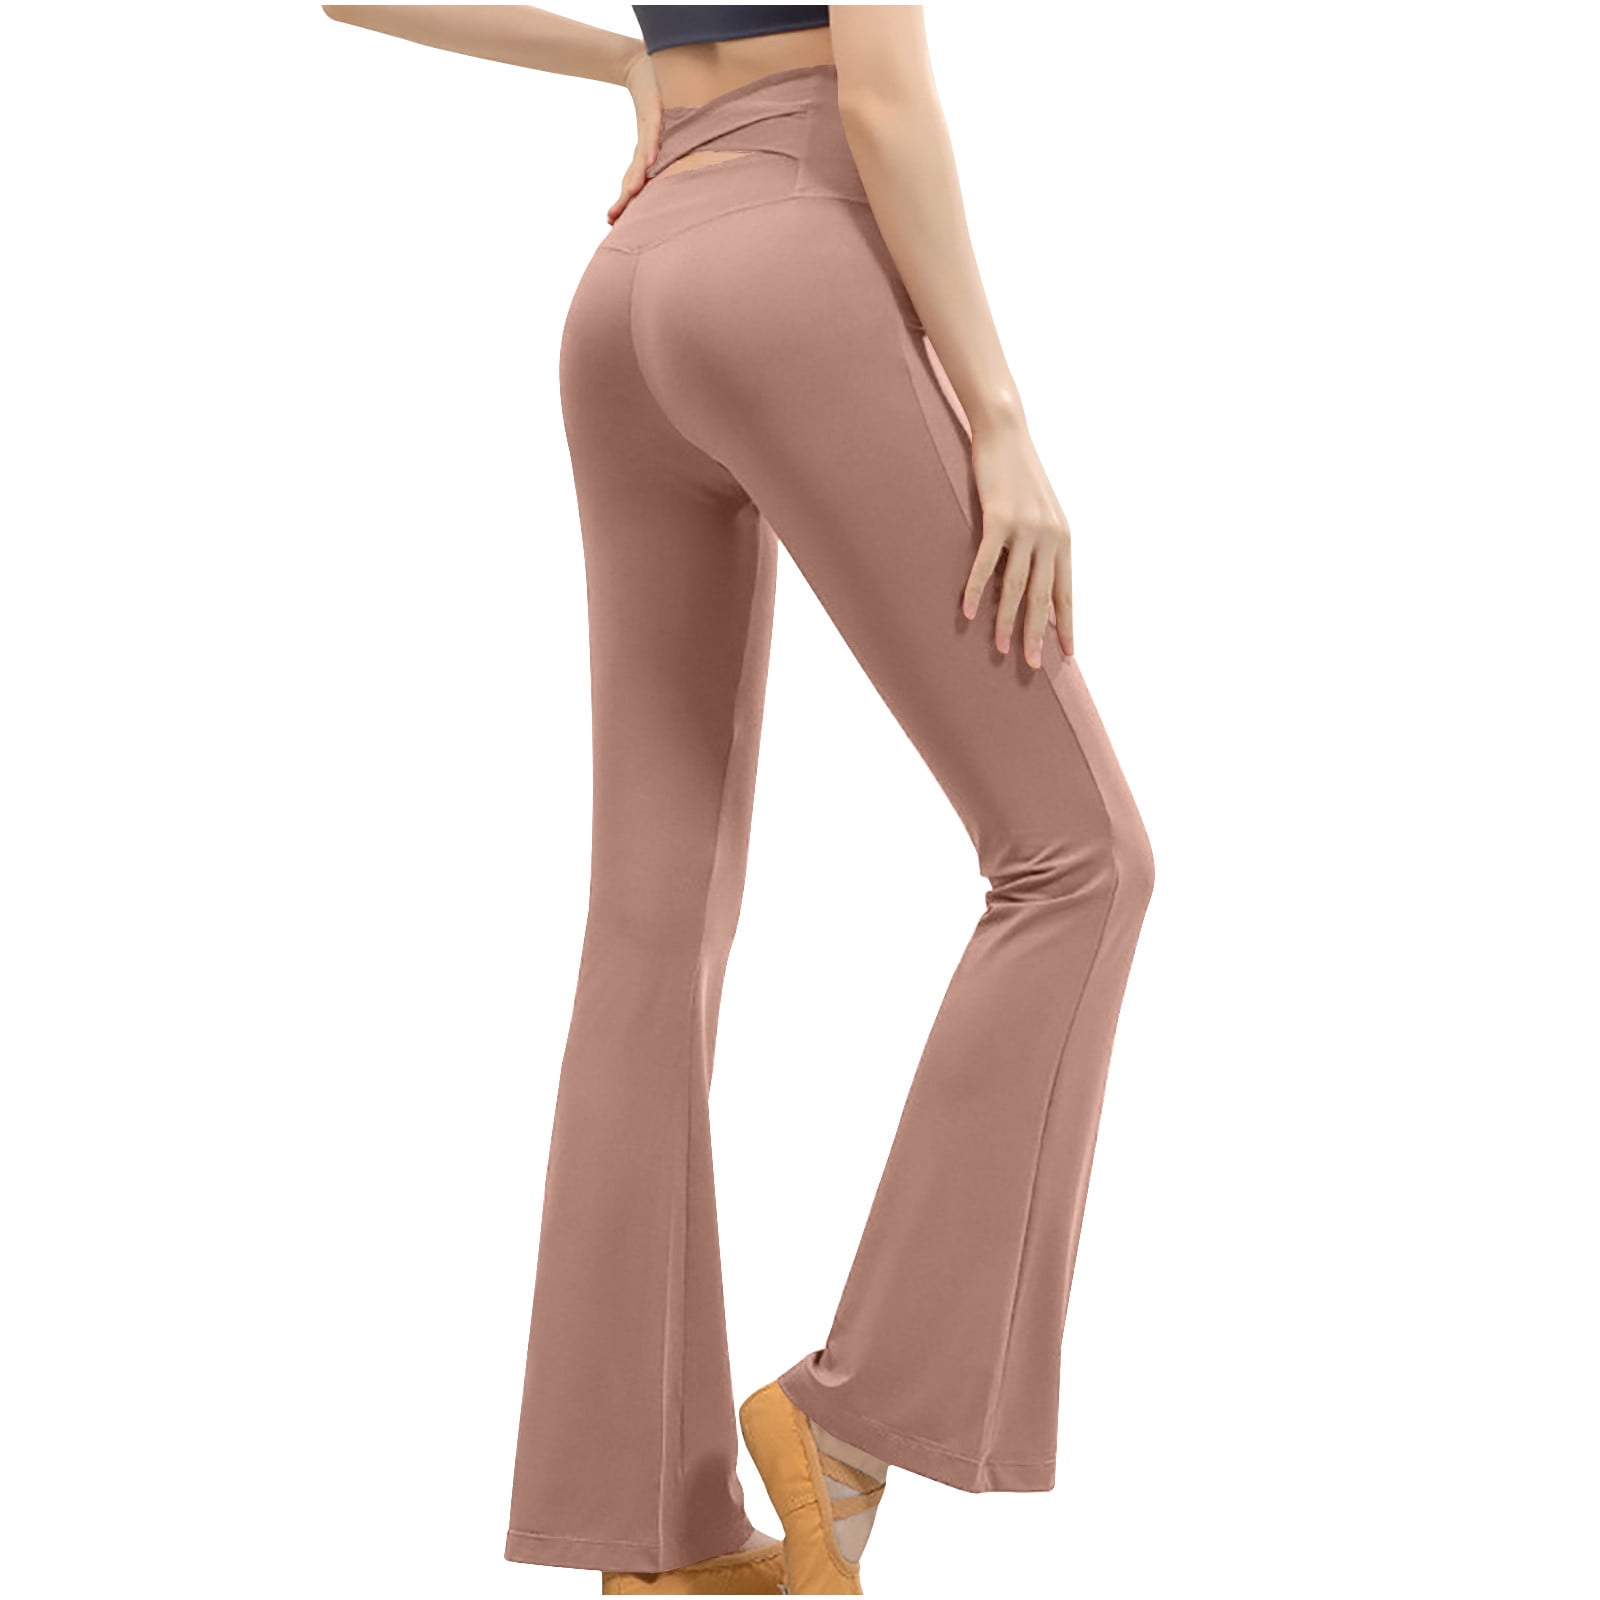 Flare Yoga Pants for Women Buttery Soft High Waist Bootcut Pants